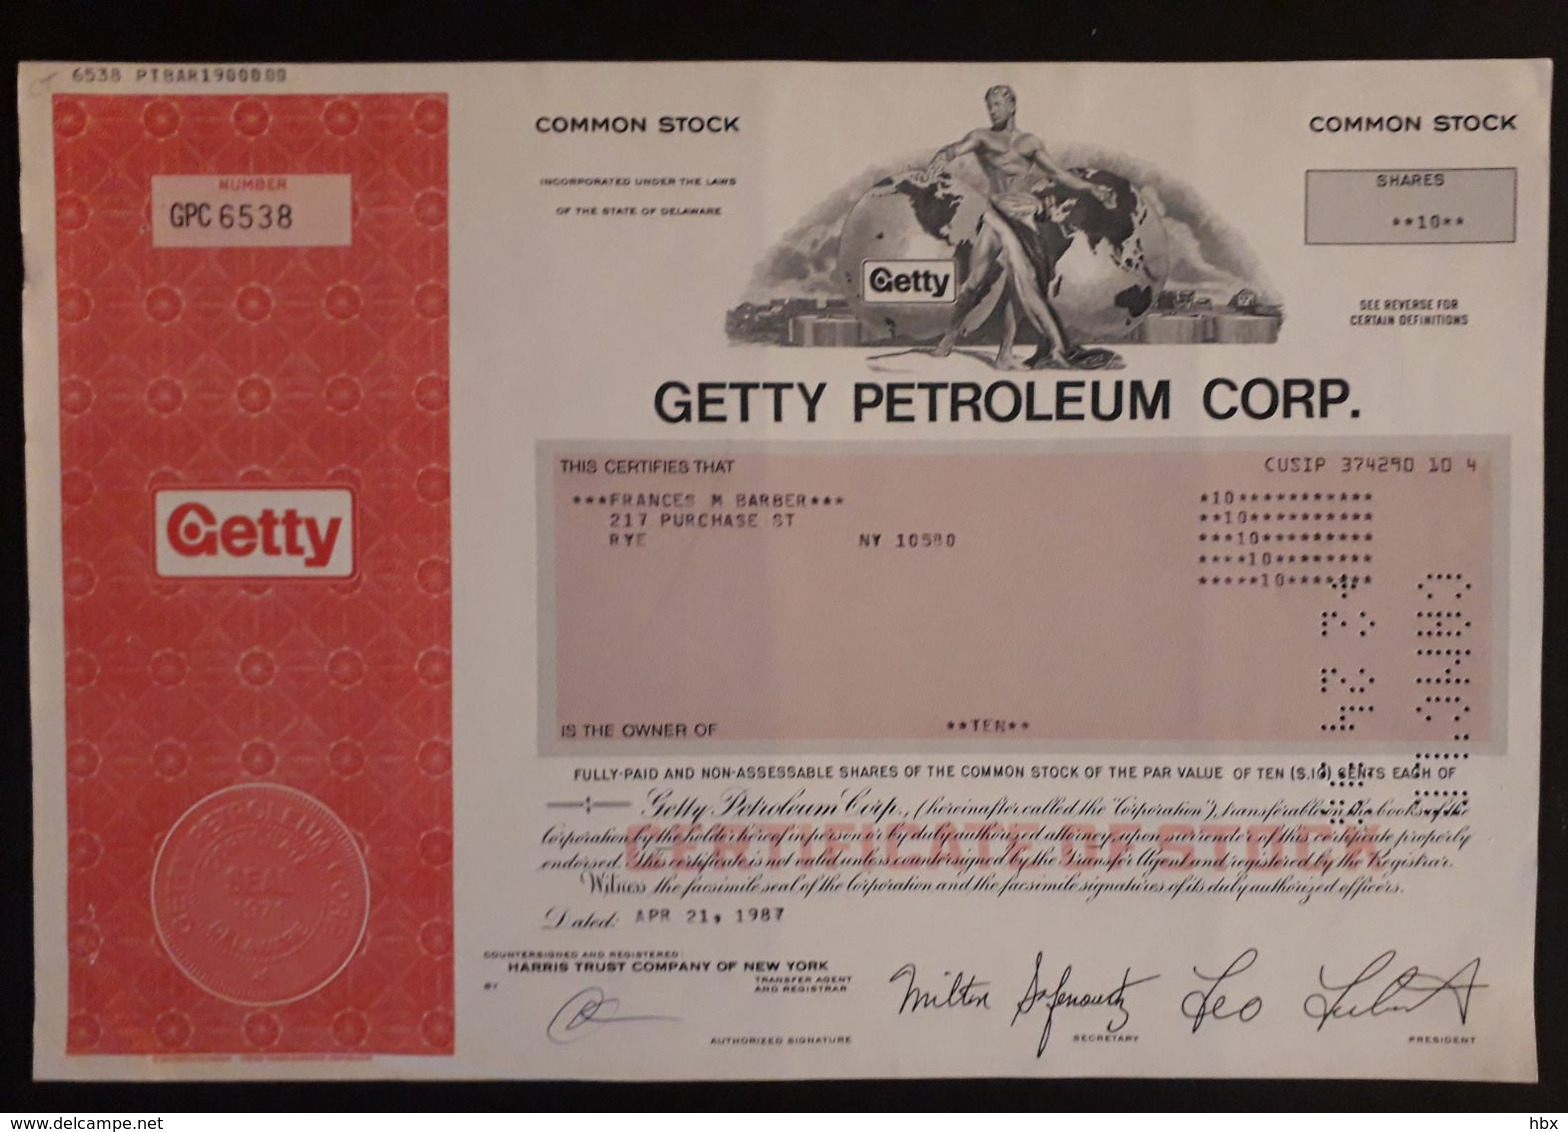 Getty Petroleum Corporation - Aardolie